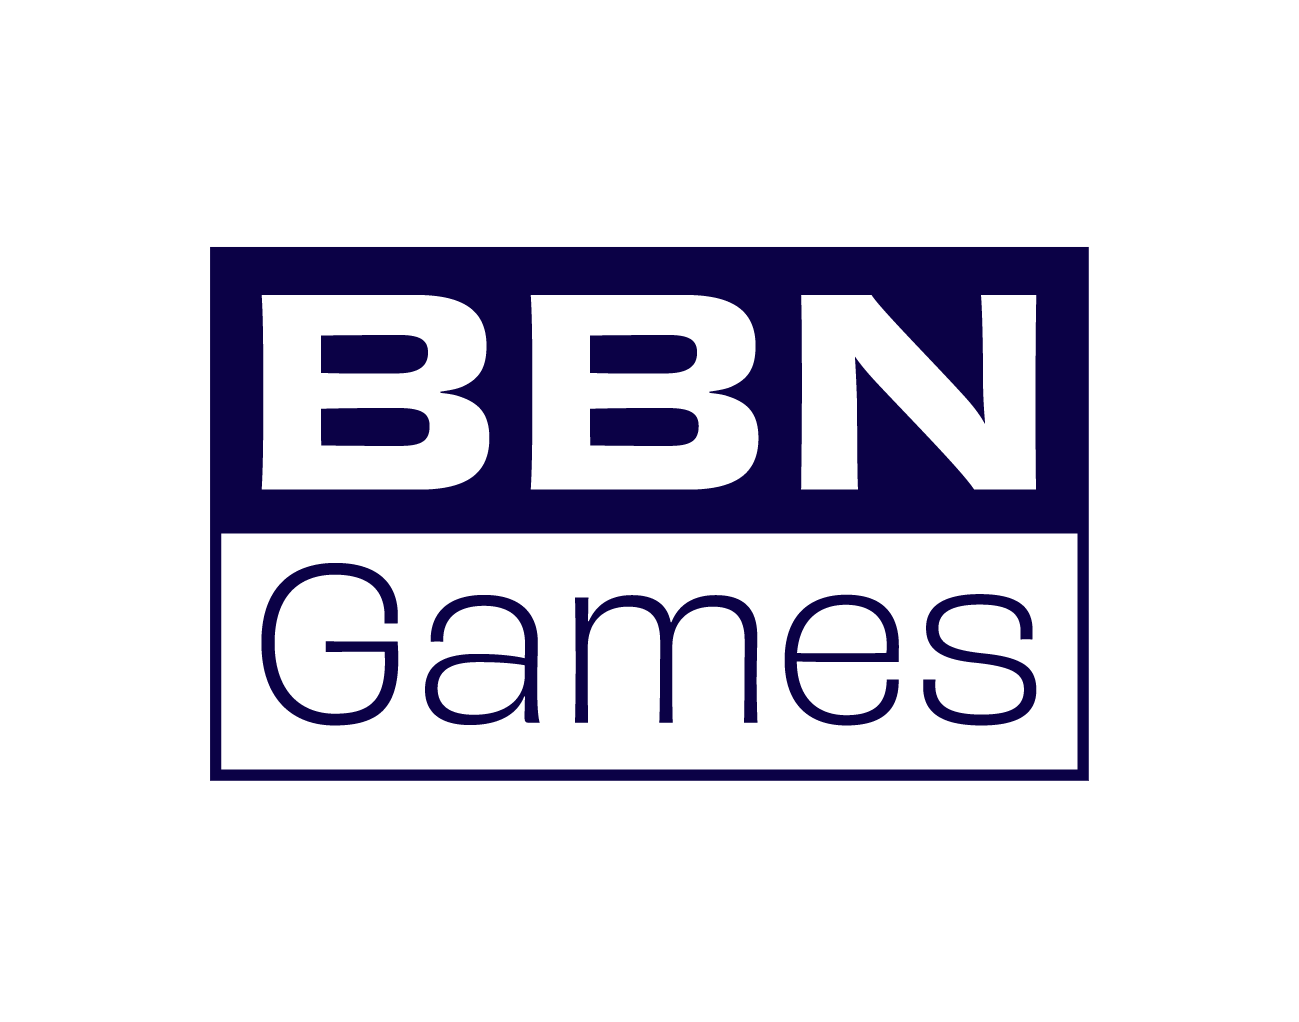 BBN Games